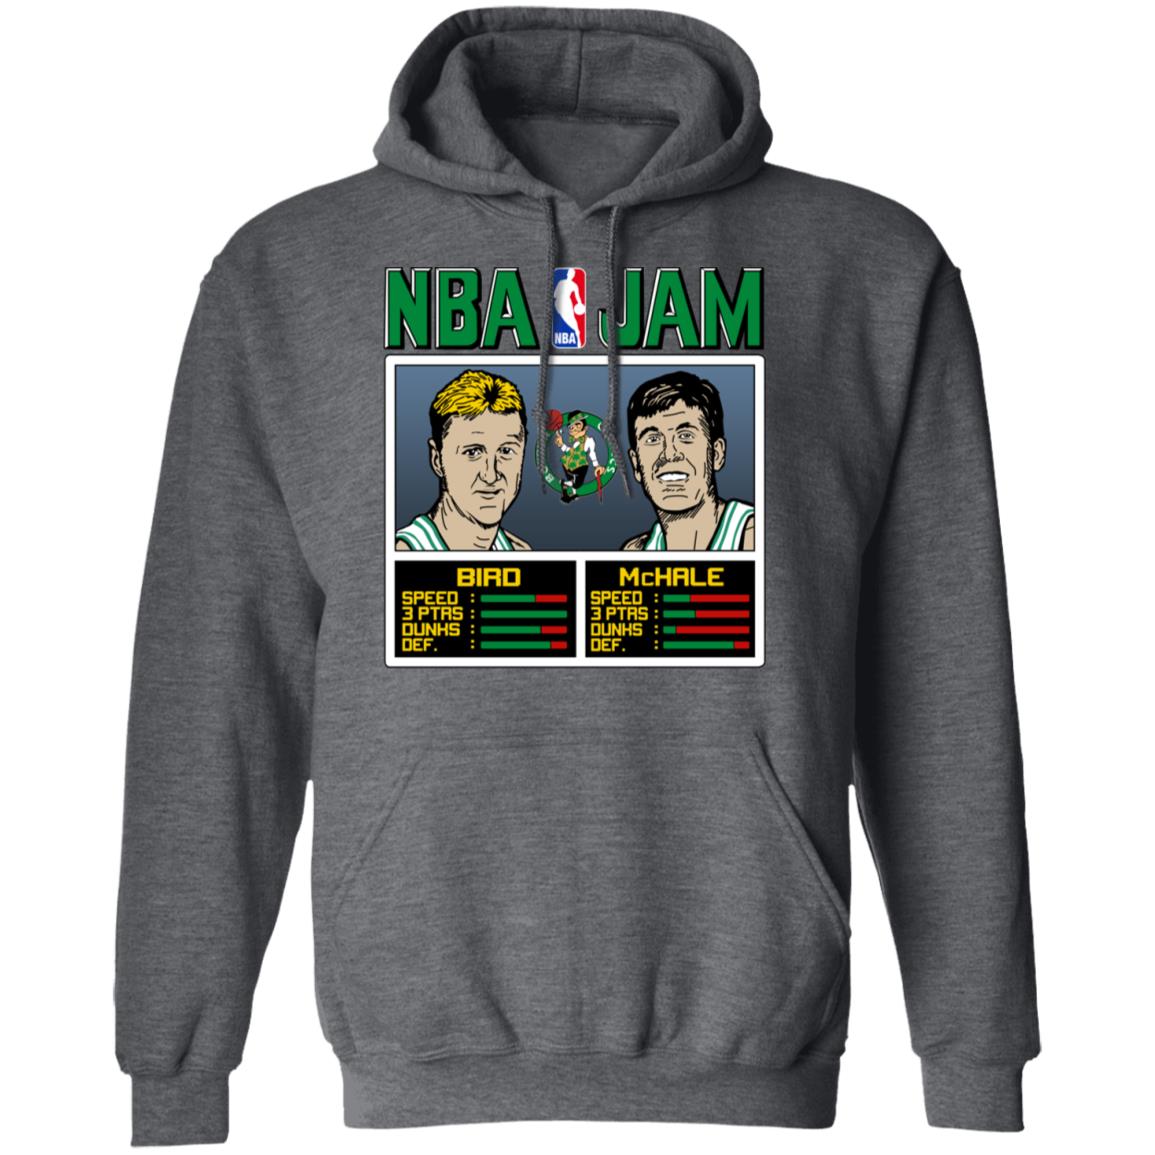 Boston Celtics Christmas ELF Funny NBA V-Neck T-Shirt